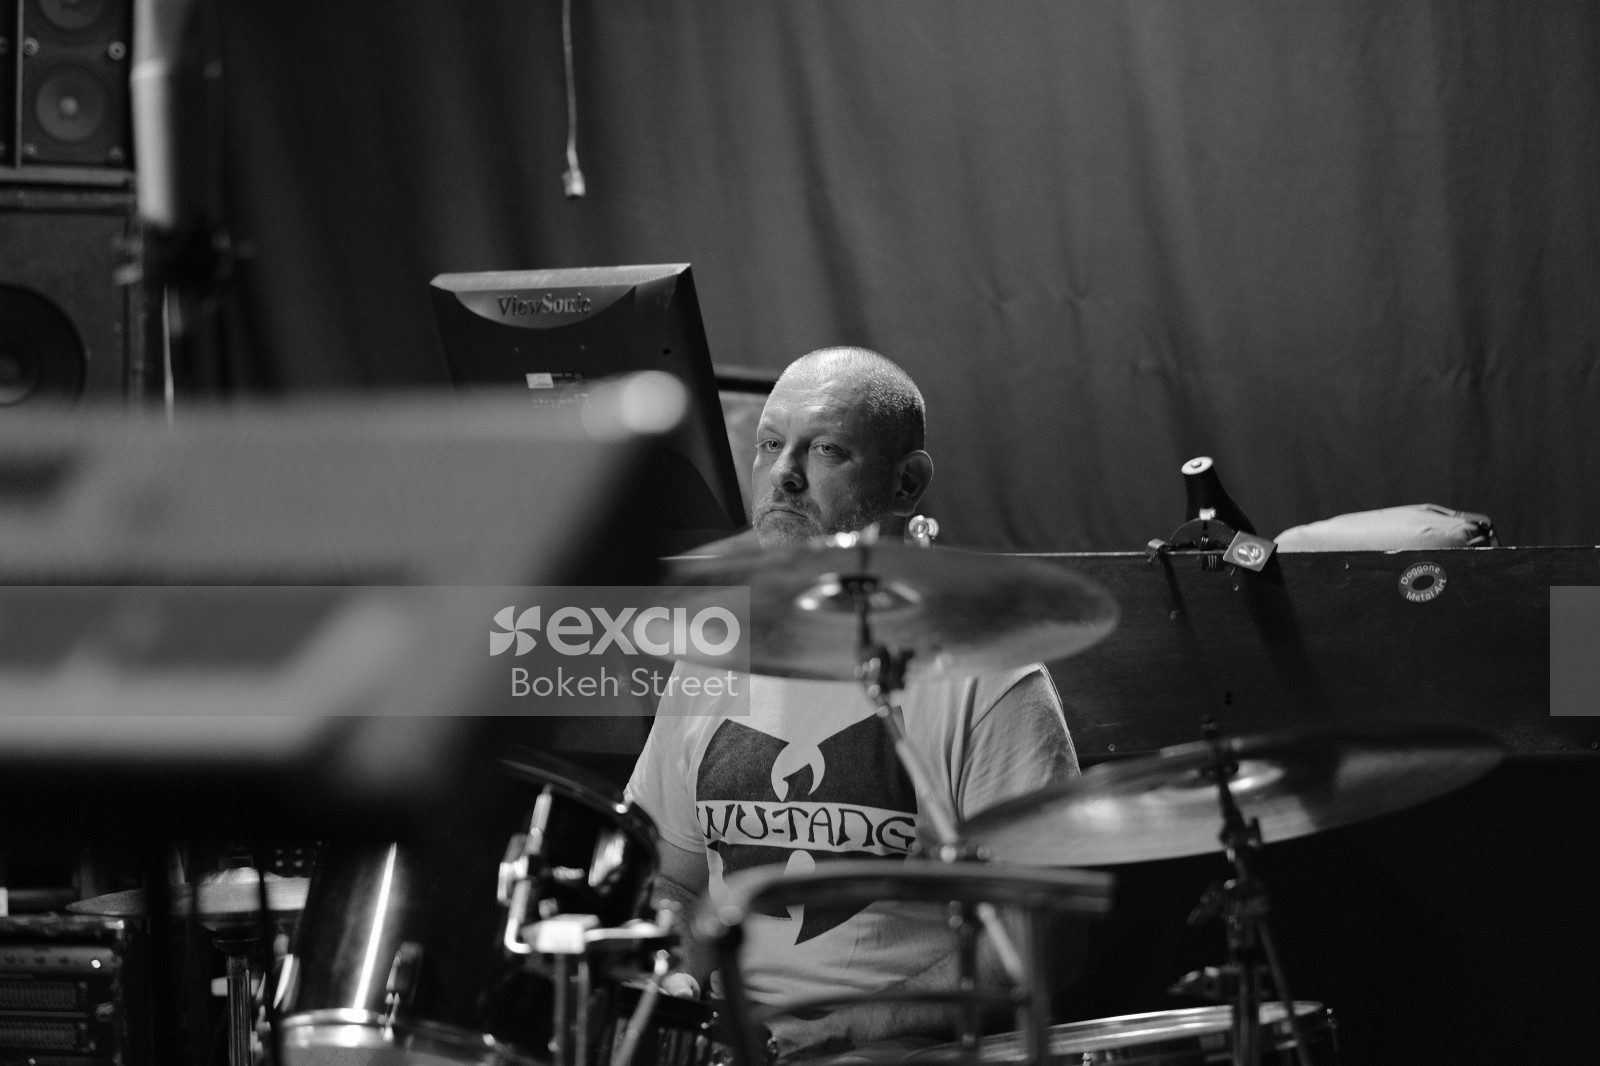 Drummer of band "Vietnam" in wu-tang shirt monochrome